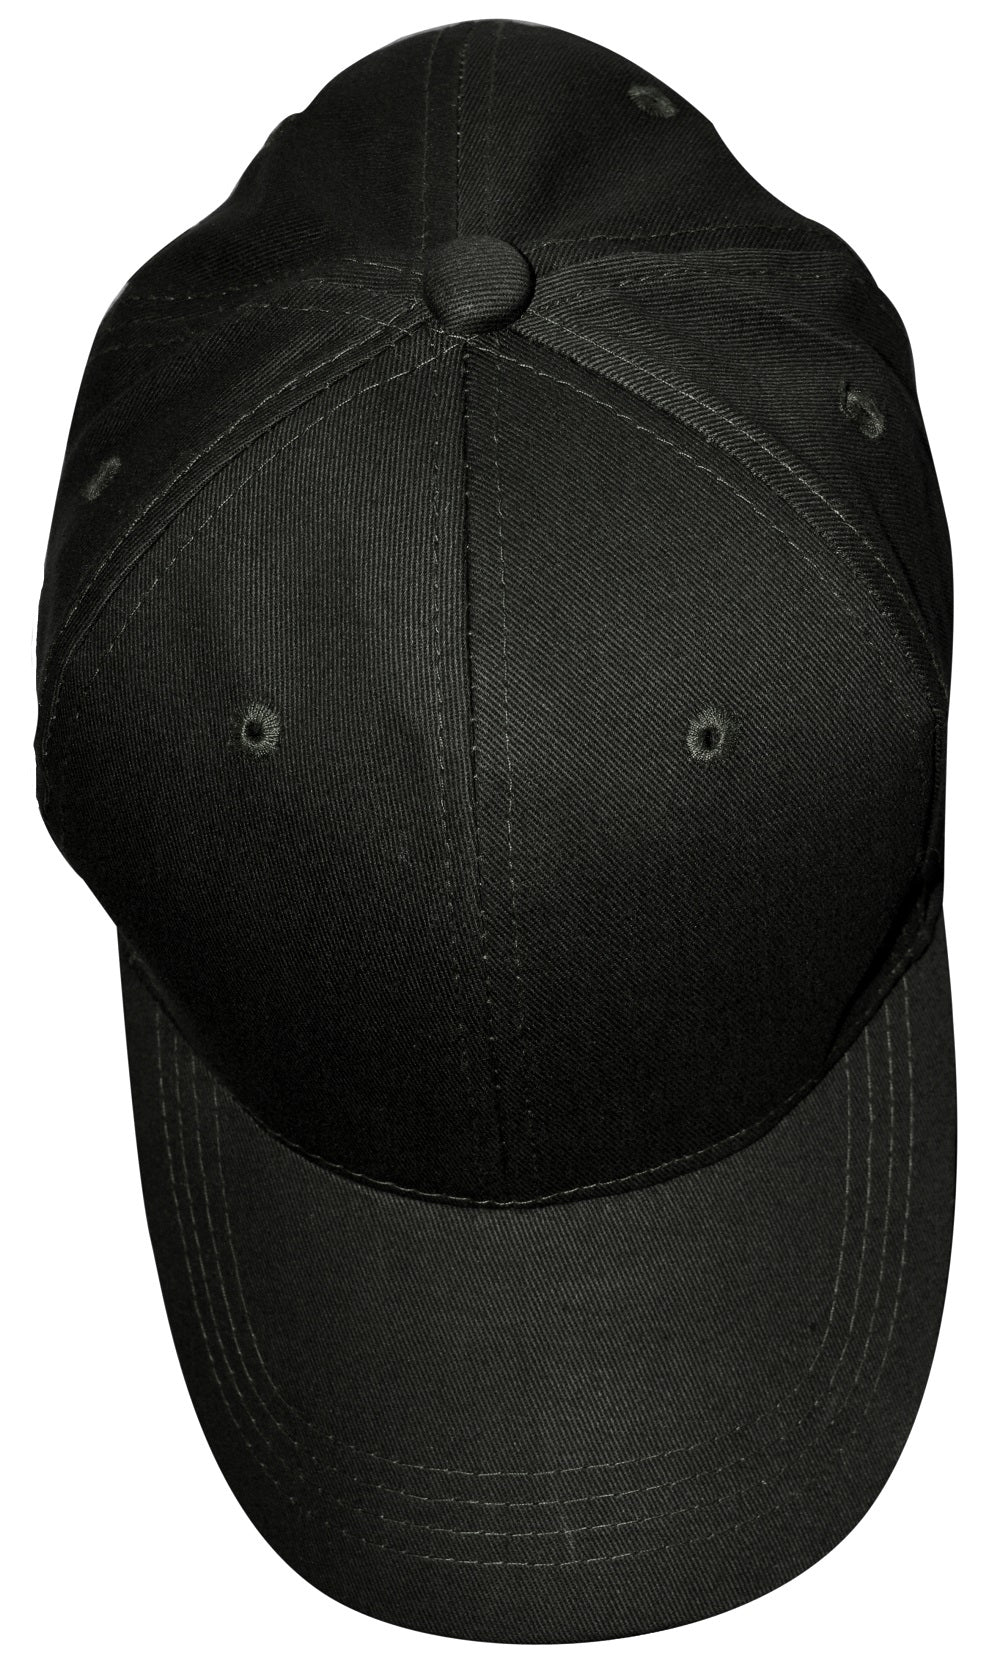 OCTAVE Unisex Baseball Cap Hat - Curved Peak Adjustable Metal Buckle ...